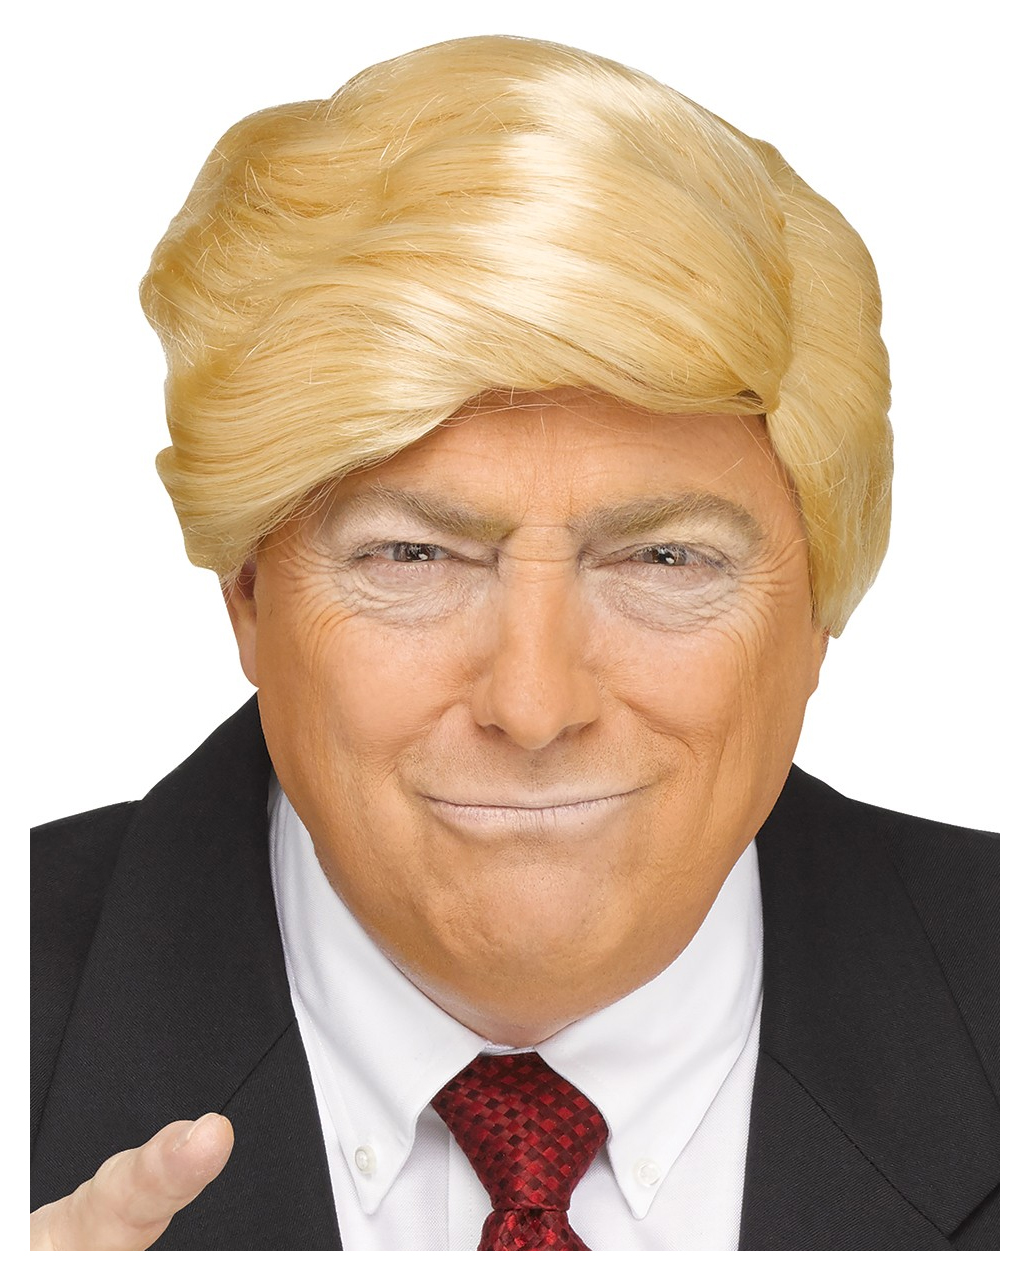 Combover Leader Herren Erwachsene President Trump Blond Kostüm Perücke